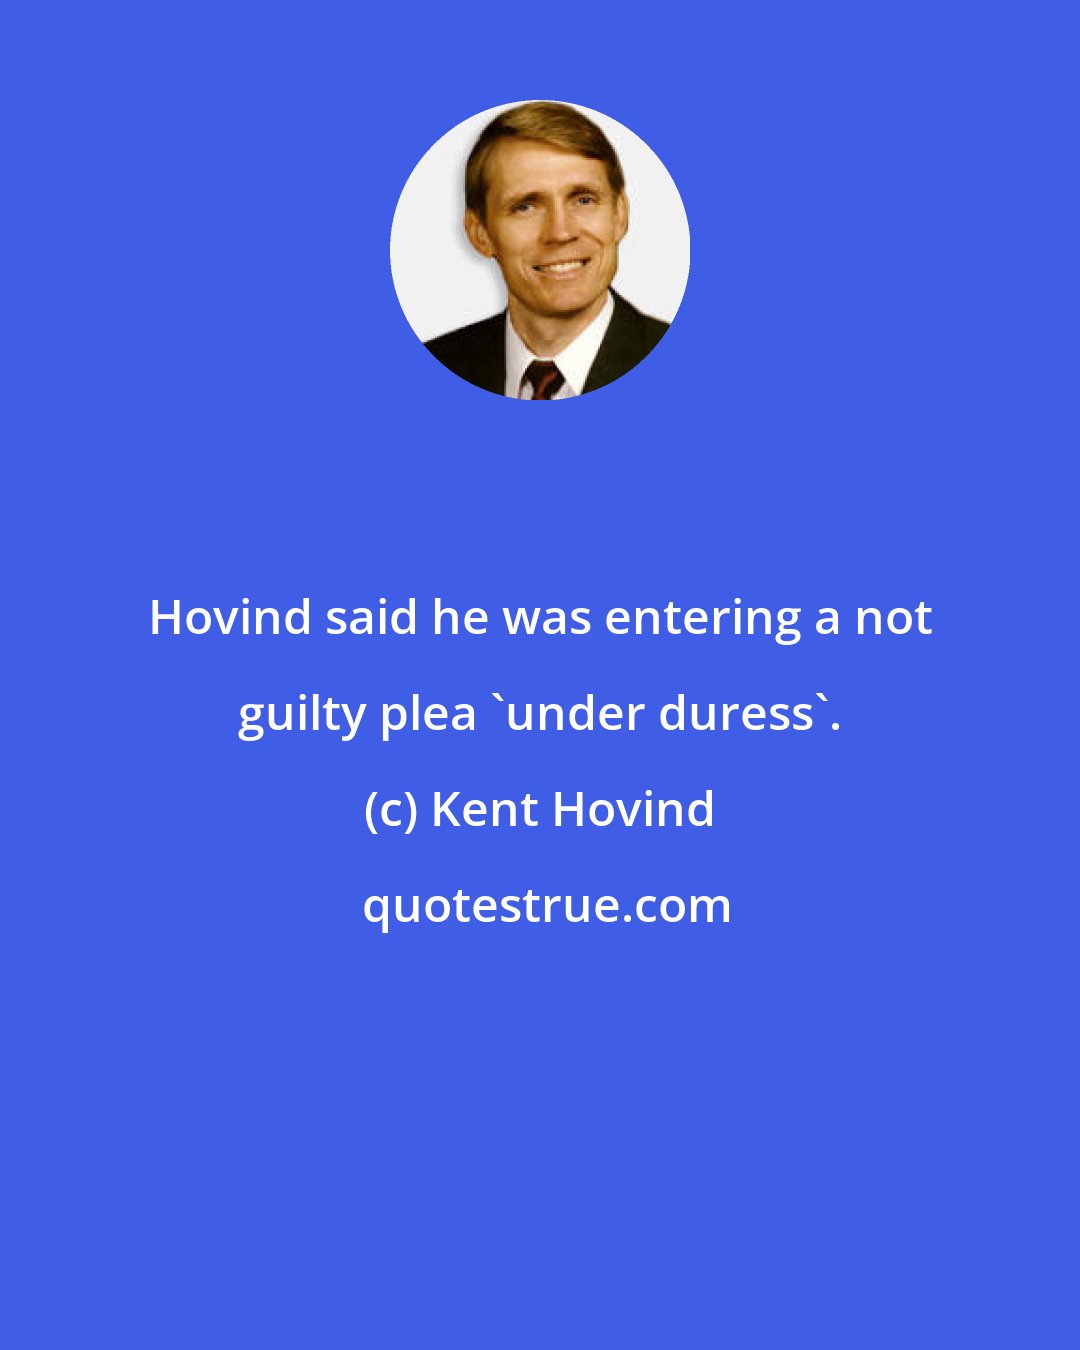 Kent Hovind: Hovind said he was entering a not guilty plea 'under duress'.